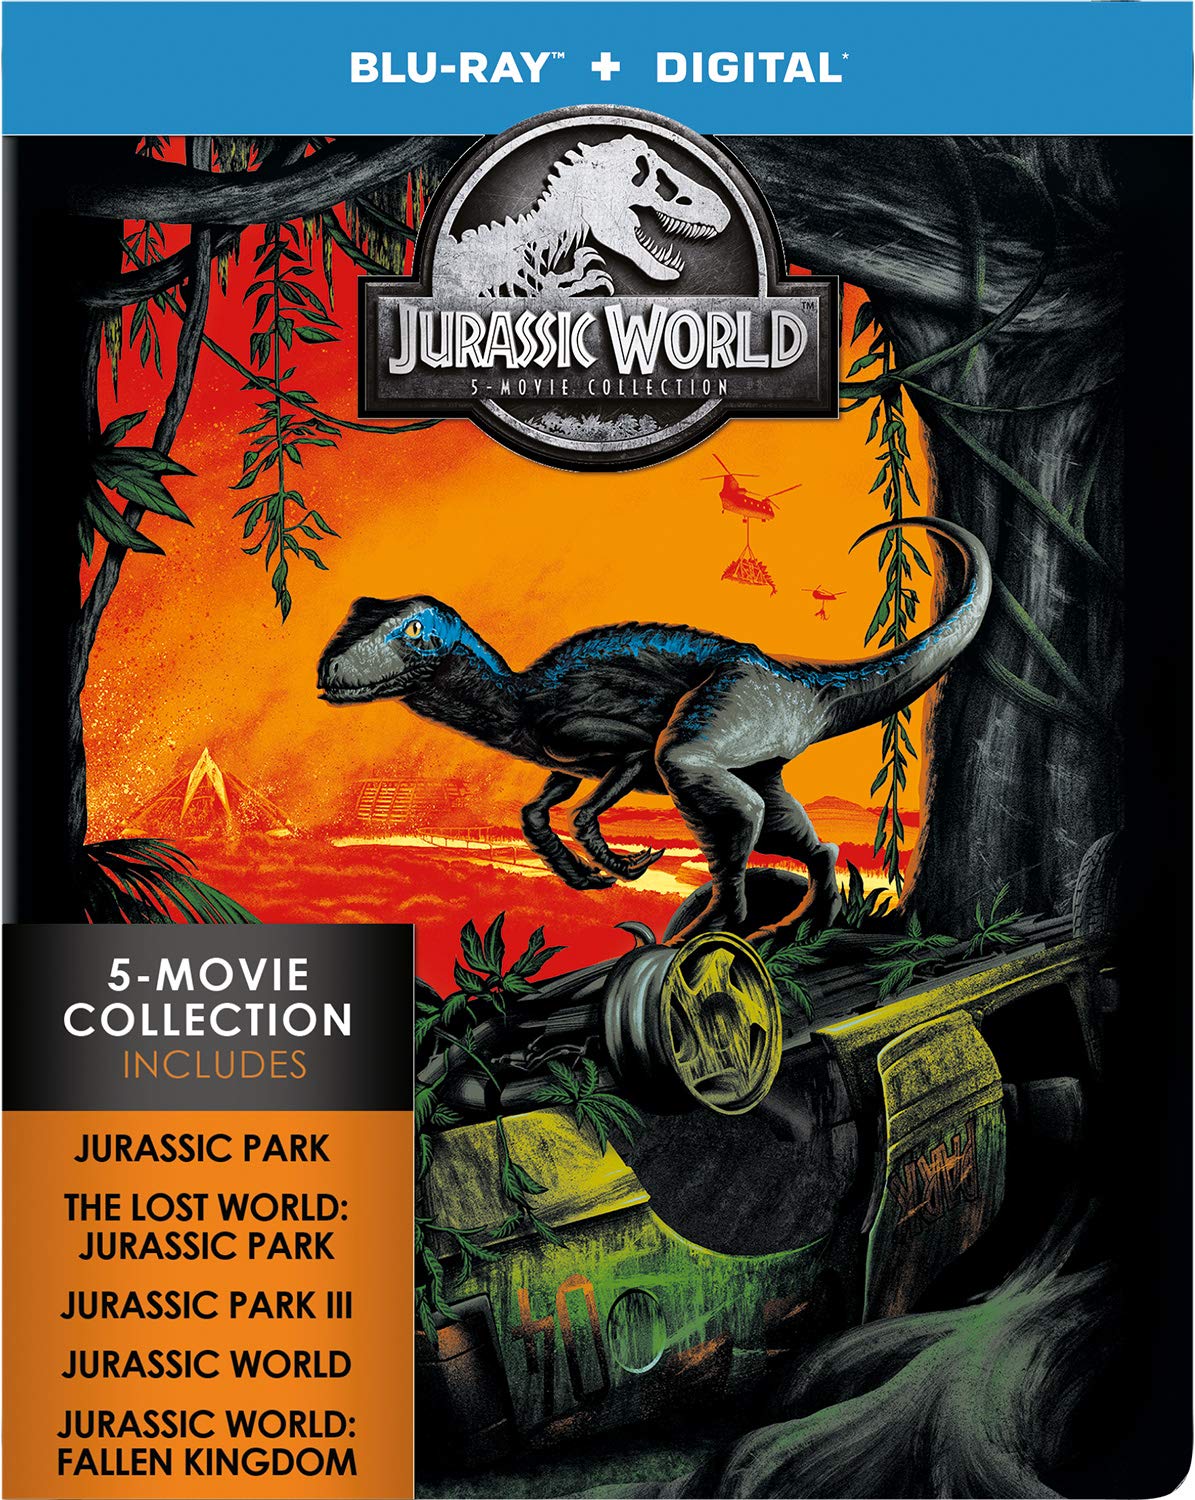 Jurassic World: 5-movie Collection (Limited Edition Steelbook) - Blu-ray [ 2018 ]  - Adventure Movies On Blu-ray - Movies On GRUV